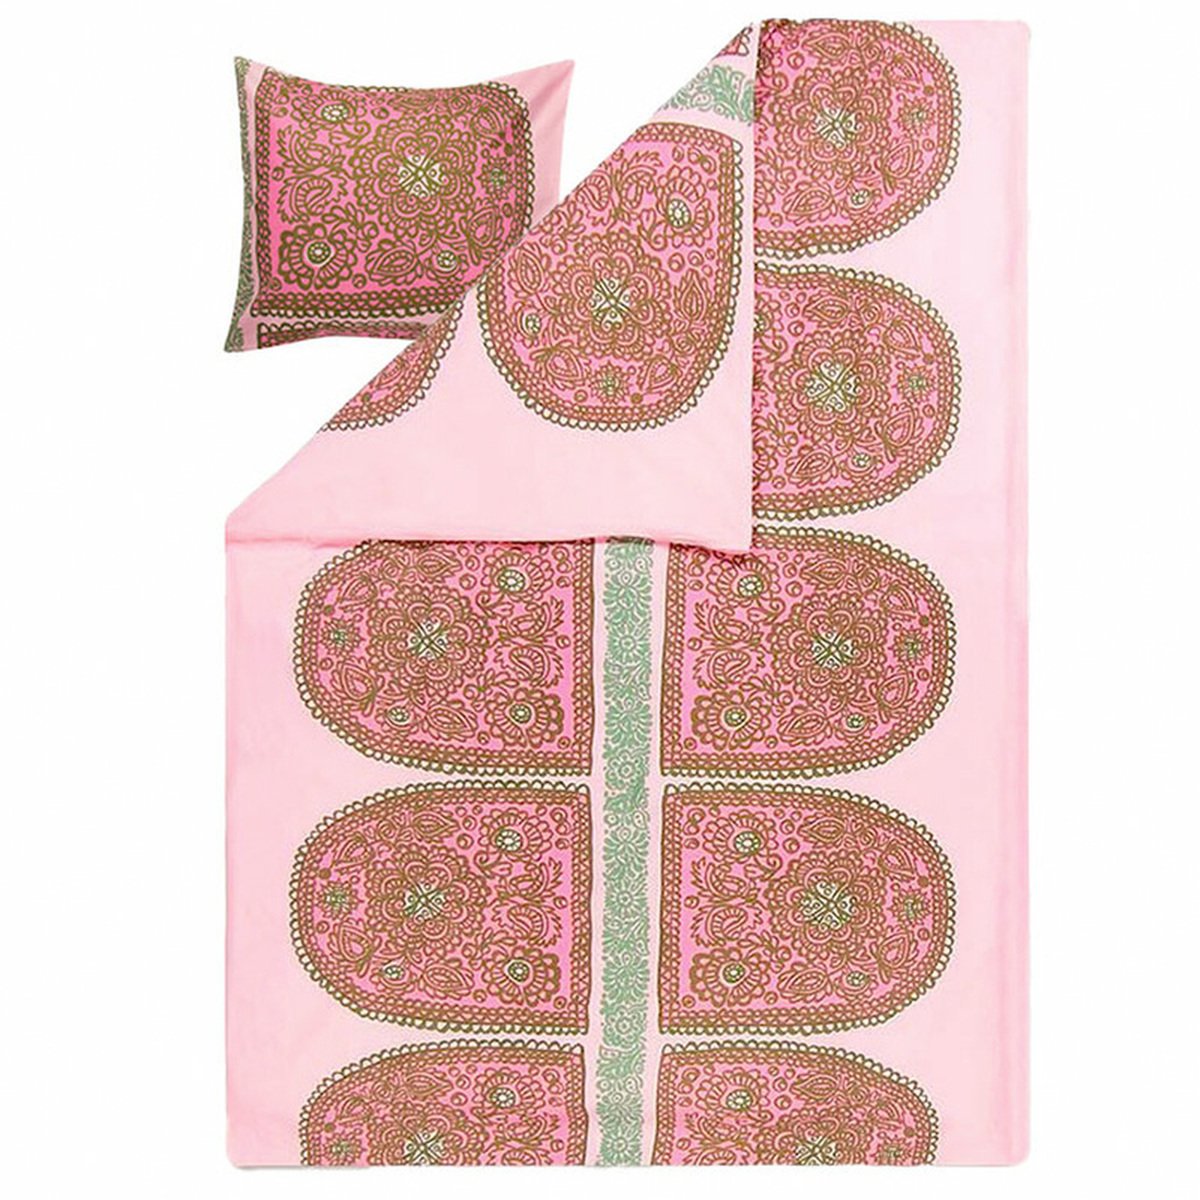 Marimekko Satula duvet cover set, pink | Pre-used design | Franckly